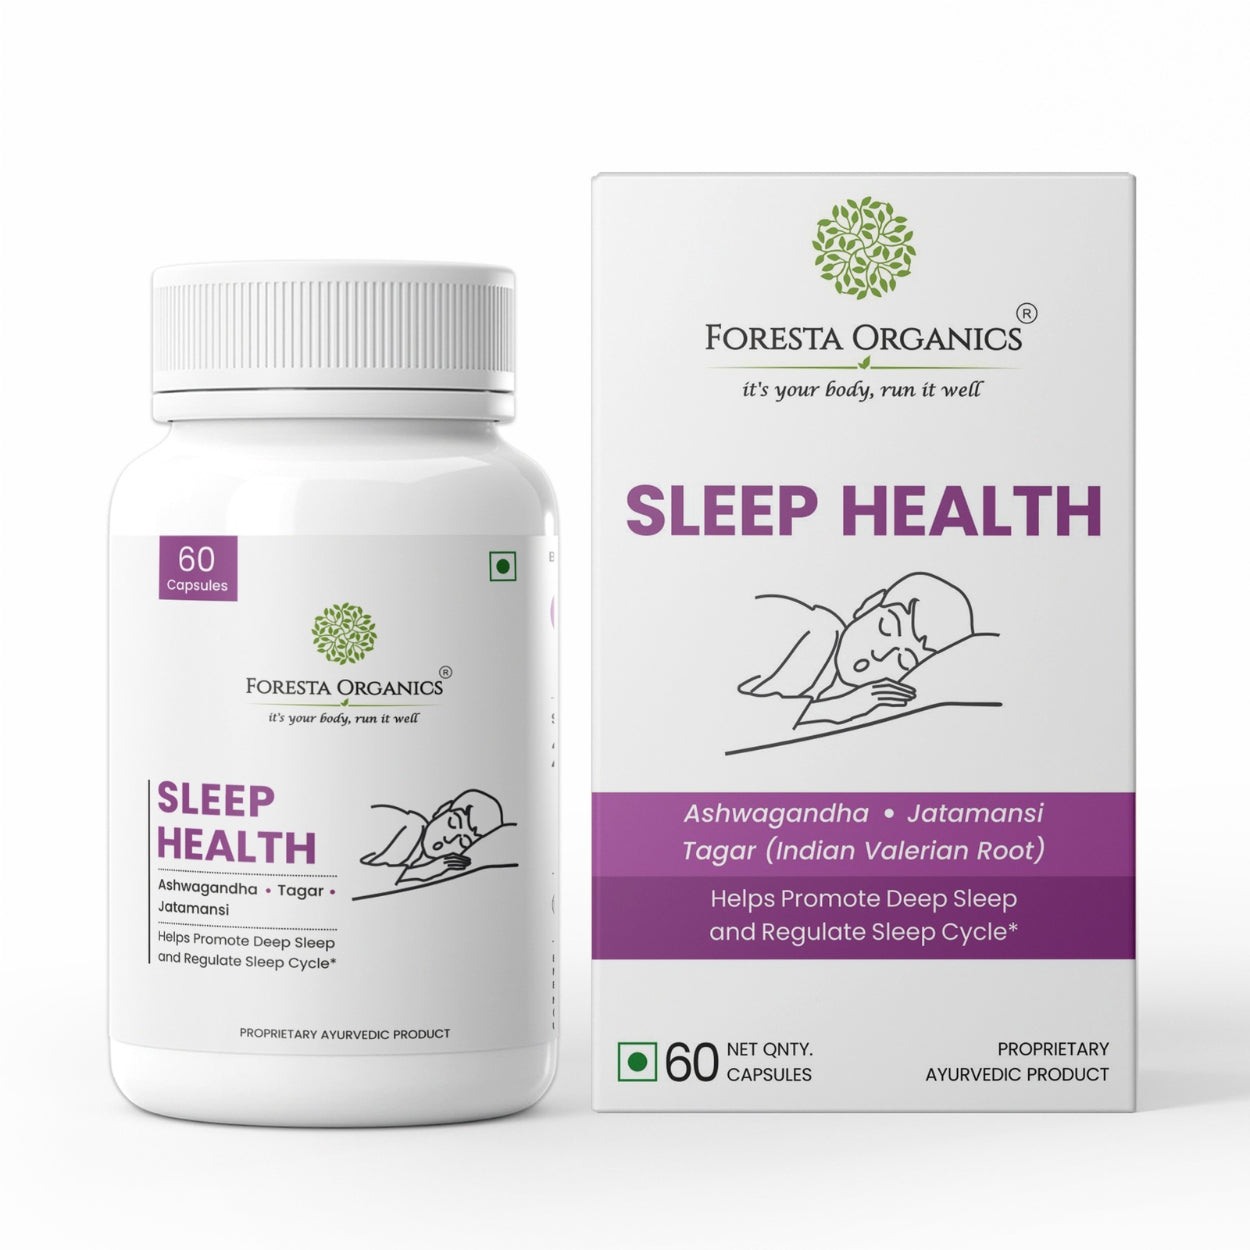 Sleep Health with Tagar (Indian Valerian Root), Jatamansi & Ashwagandha - 60 capsules